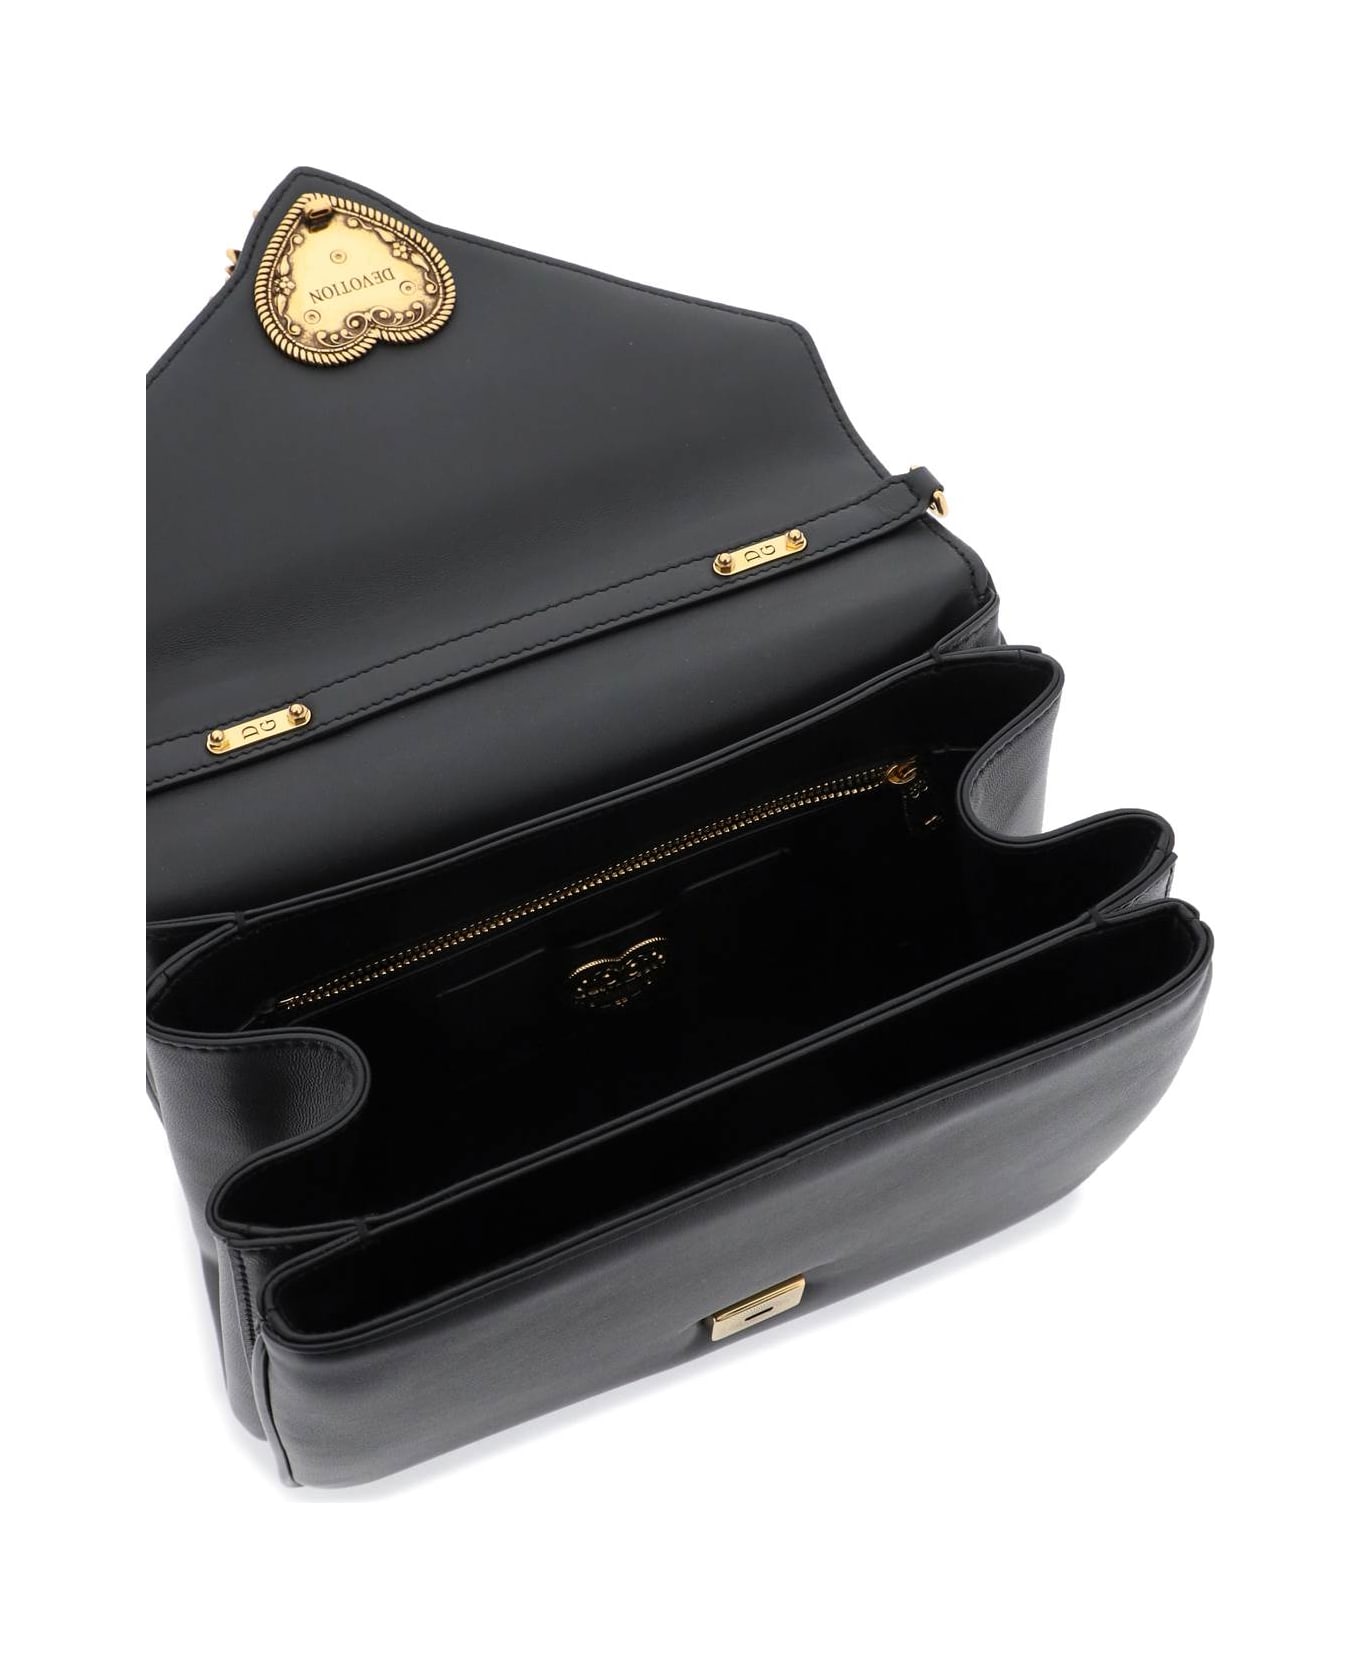 Dolce & Gabbana Devotion Handbag - NERO (Black) トートバッグ